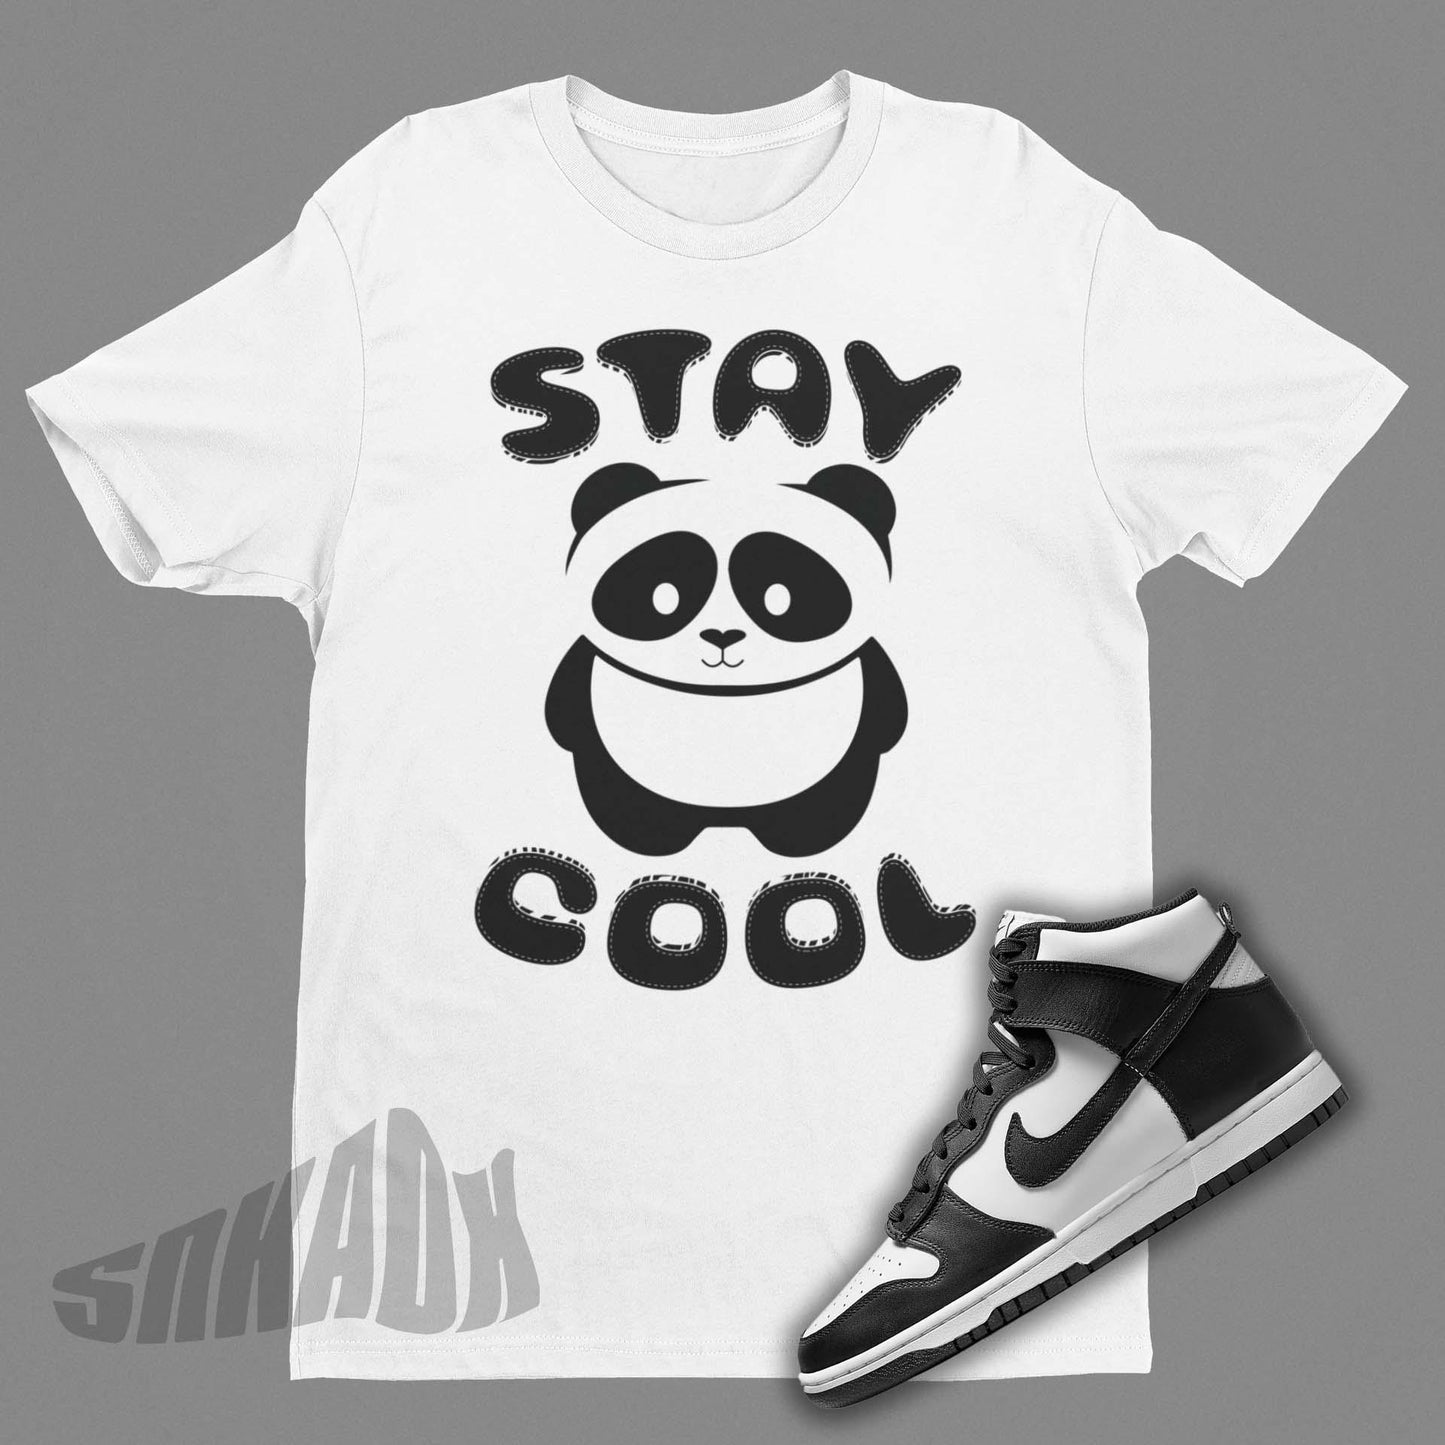 Panda Bear on white t-shirt matching Nike Dunk Panda